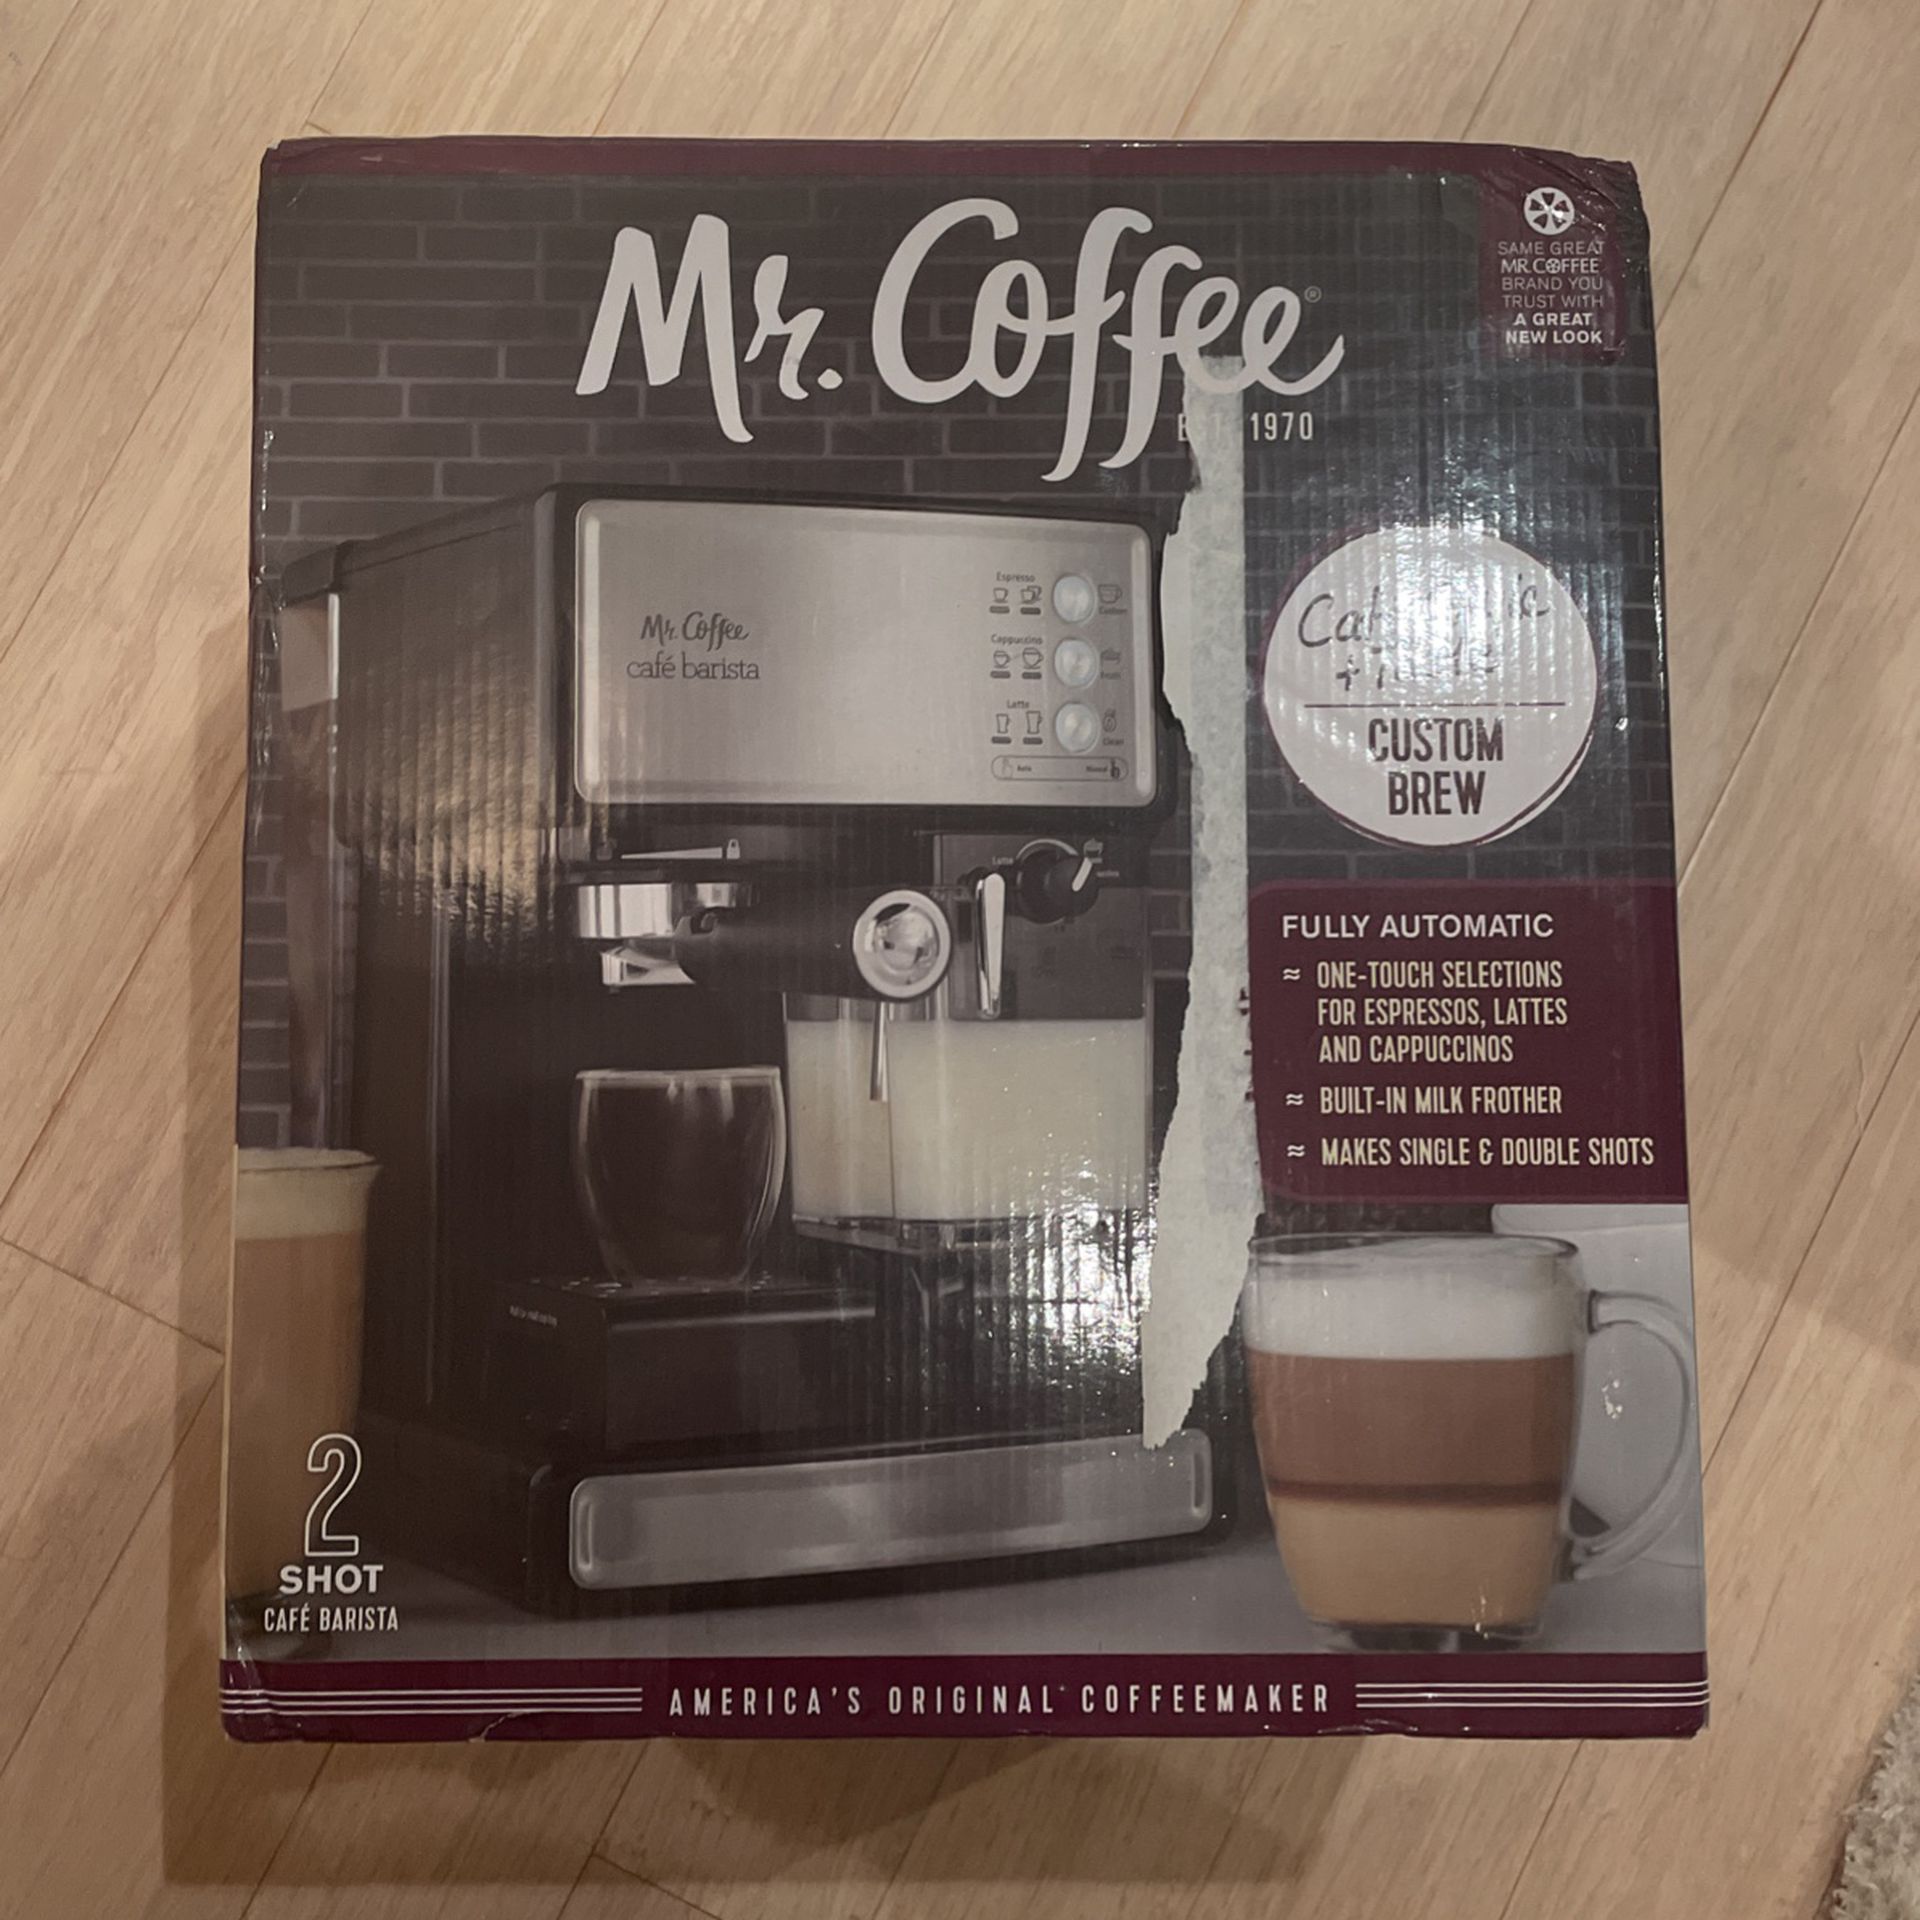 Mr. Coffee Coffee Machine with Coffee Bean Grinder